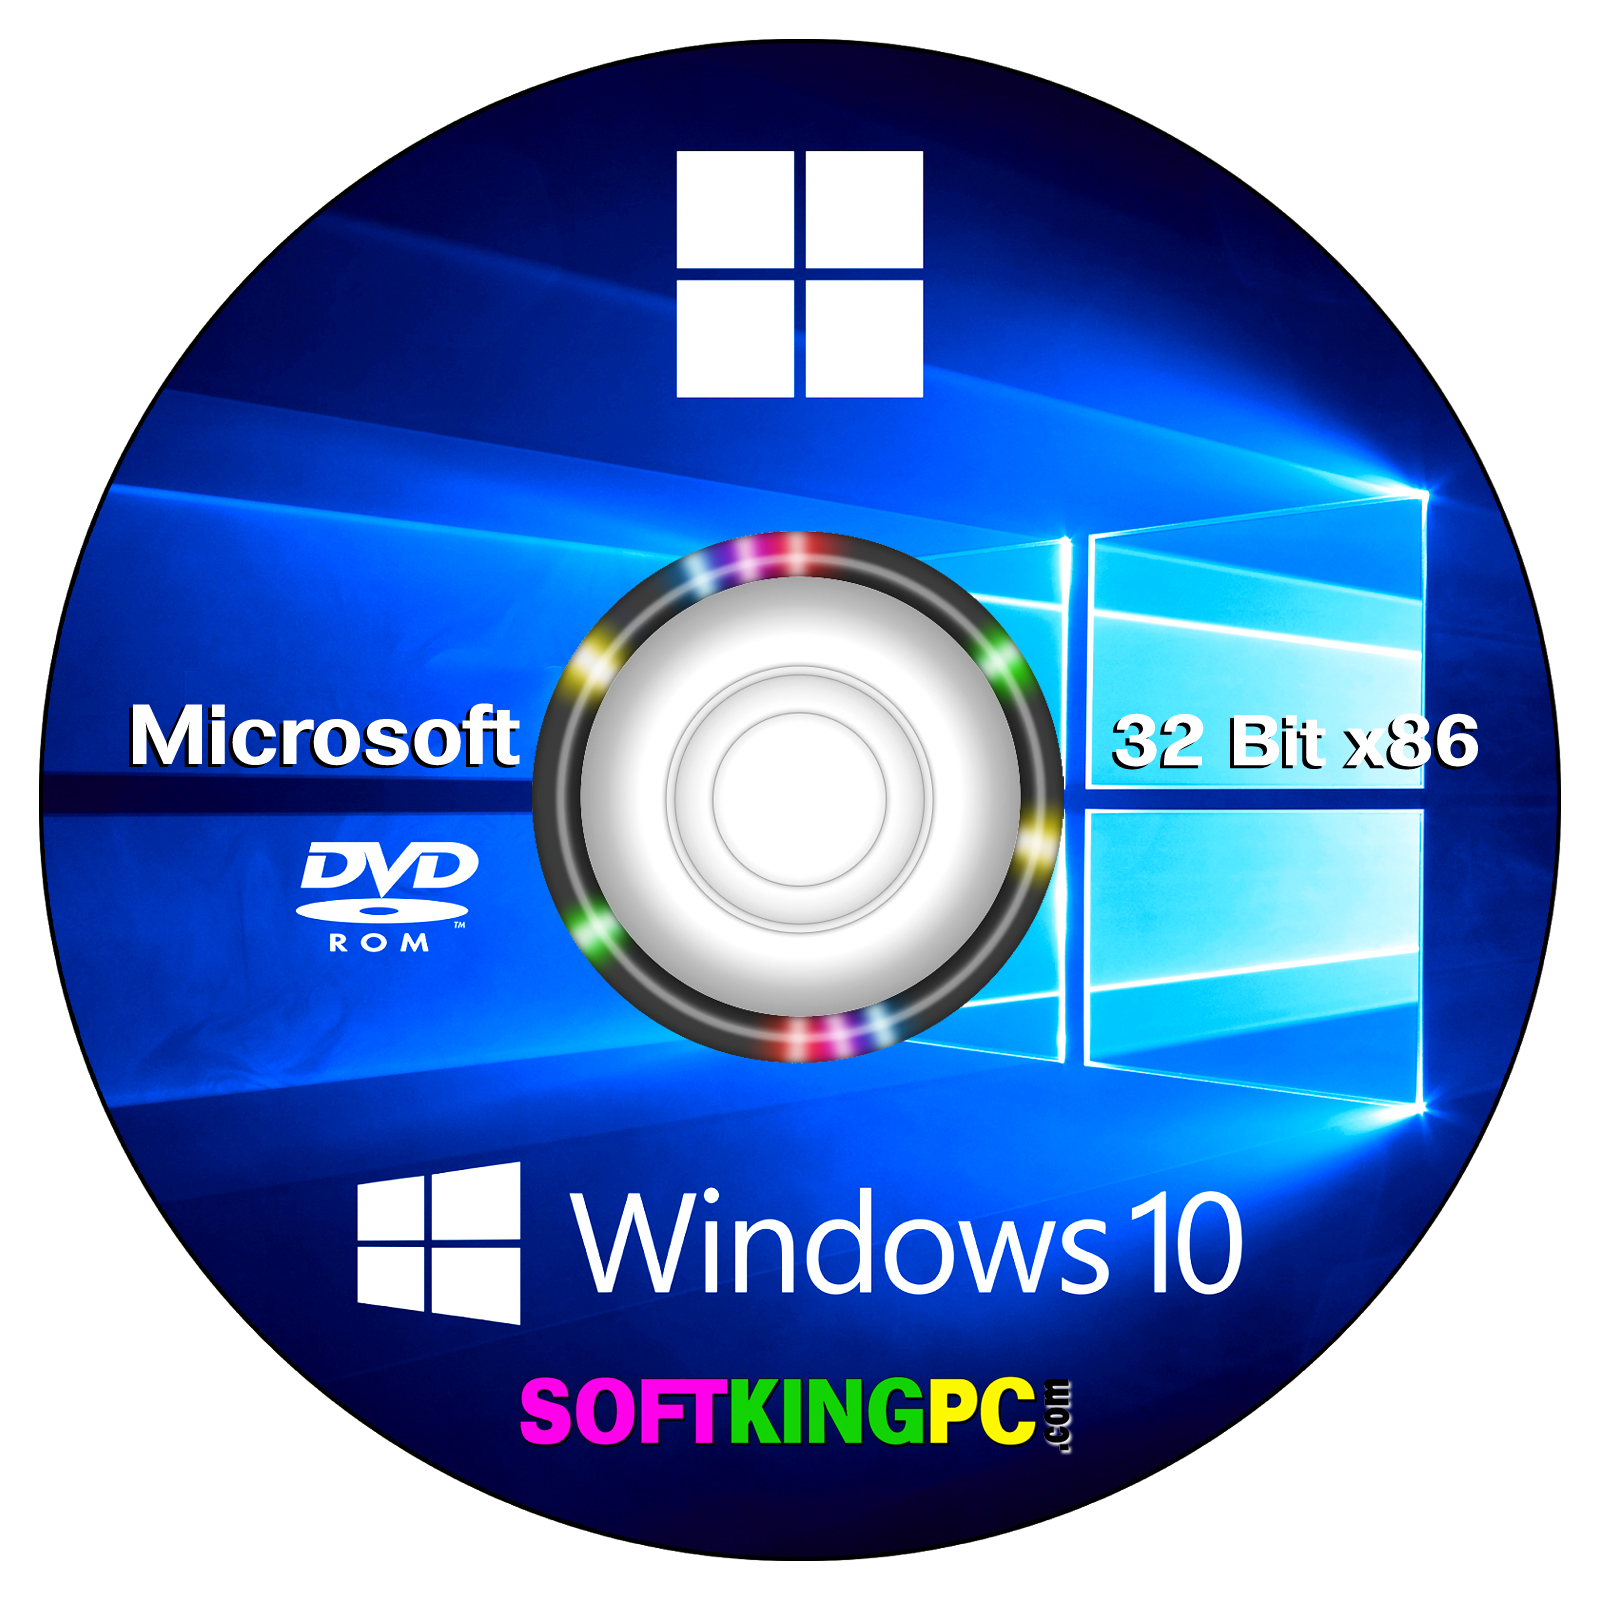 windows 10 pro iso 64 bit free download